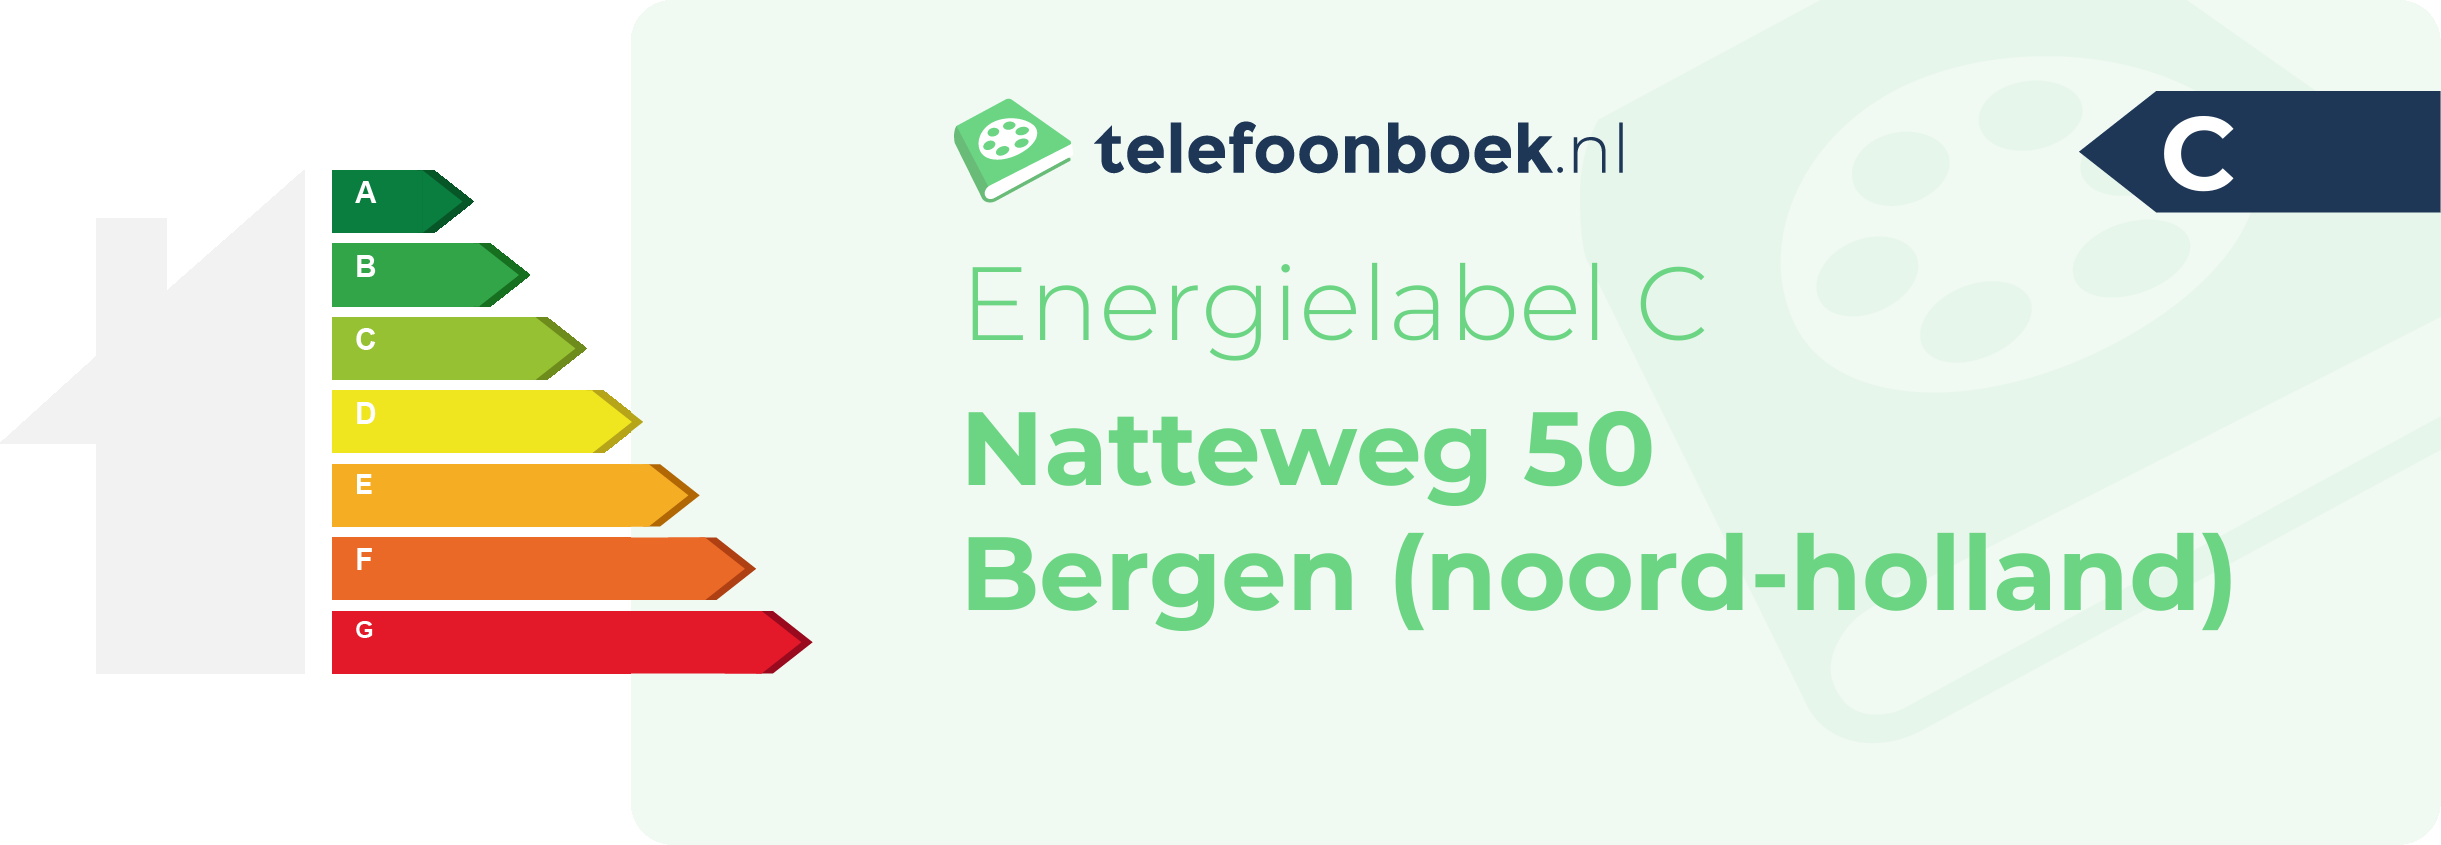 Energielabel Natteweg 50 Bergen (Noord-Holland)